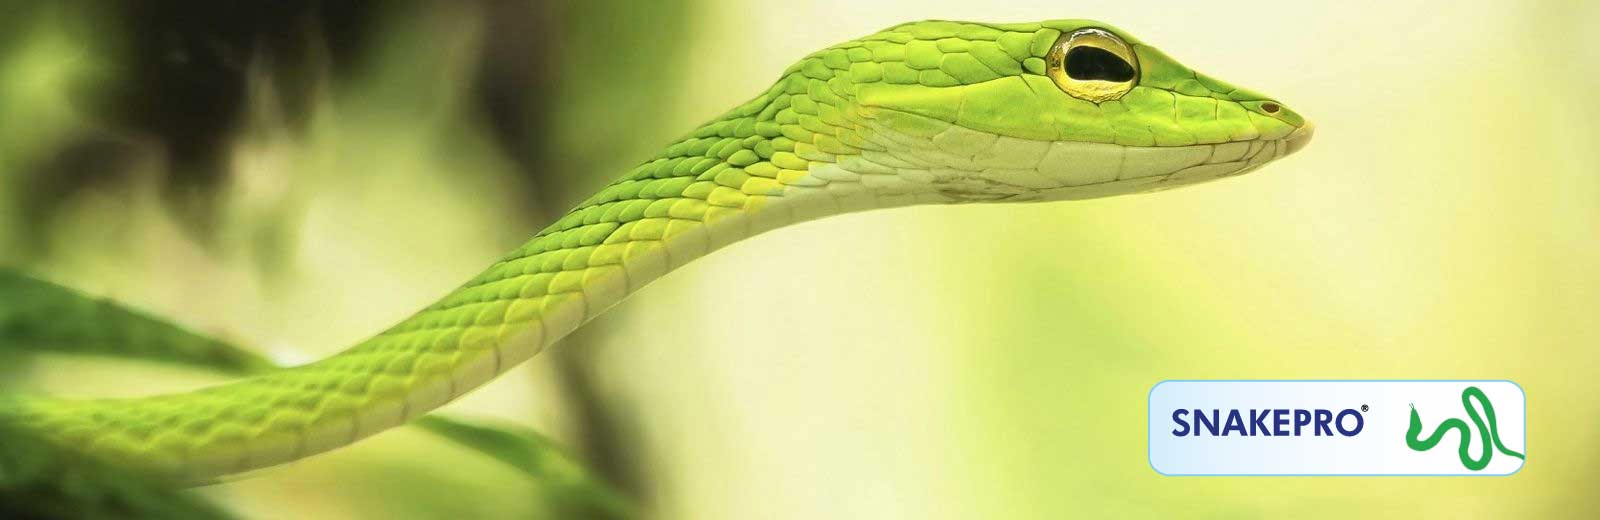 Snakepro | Snake Management